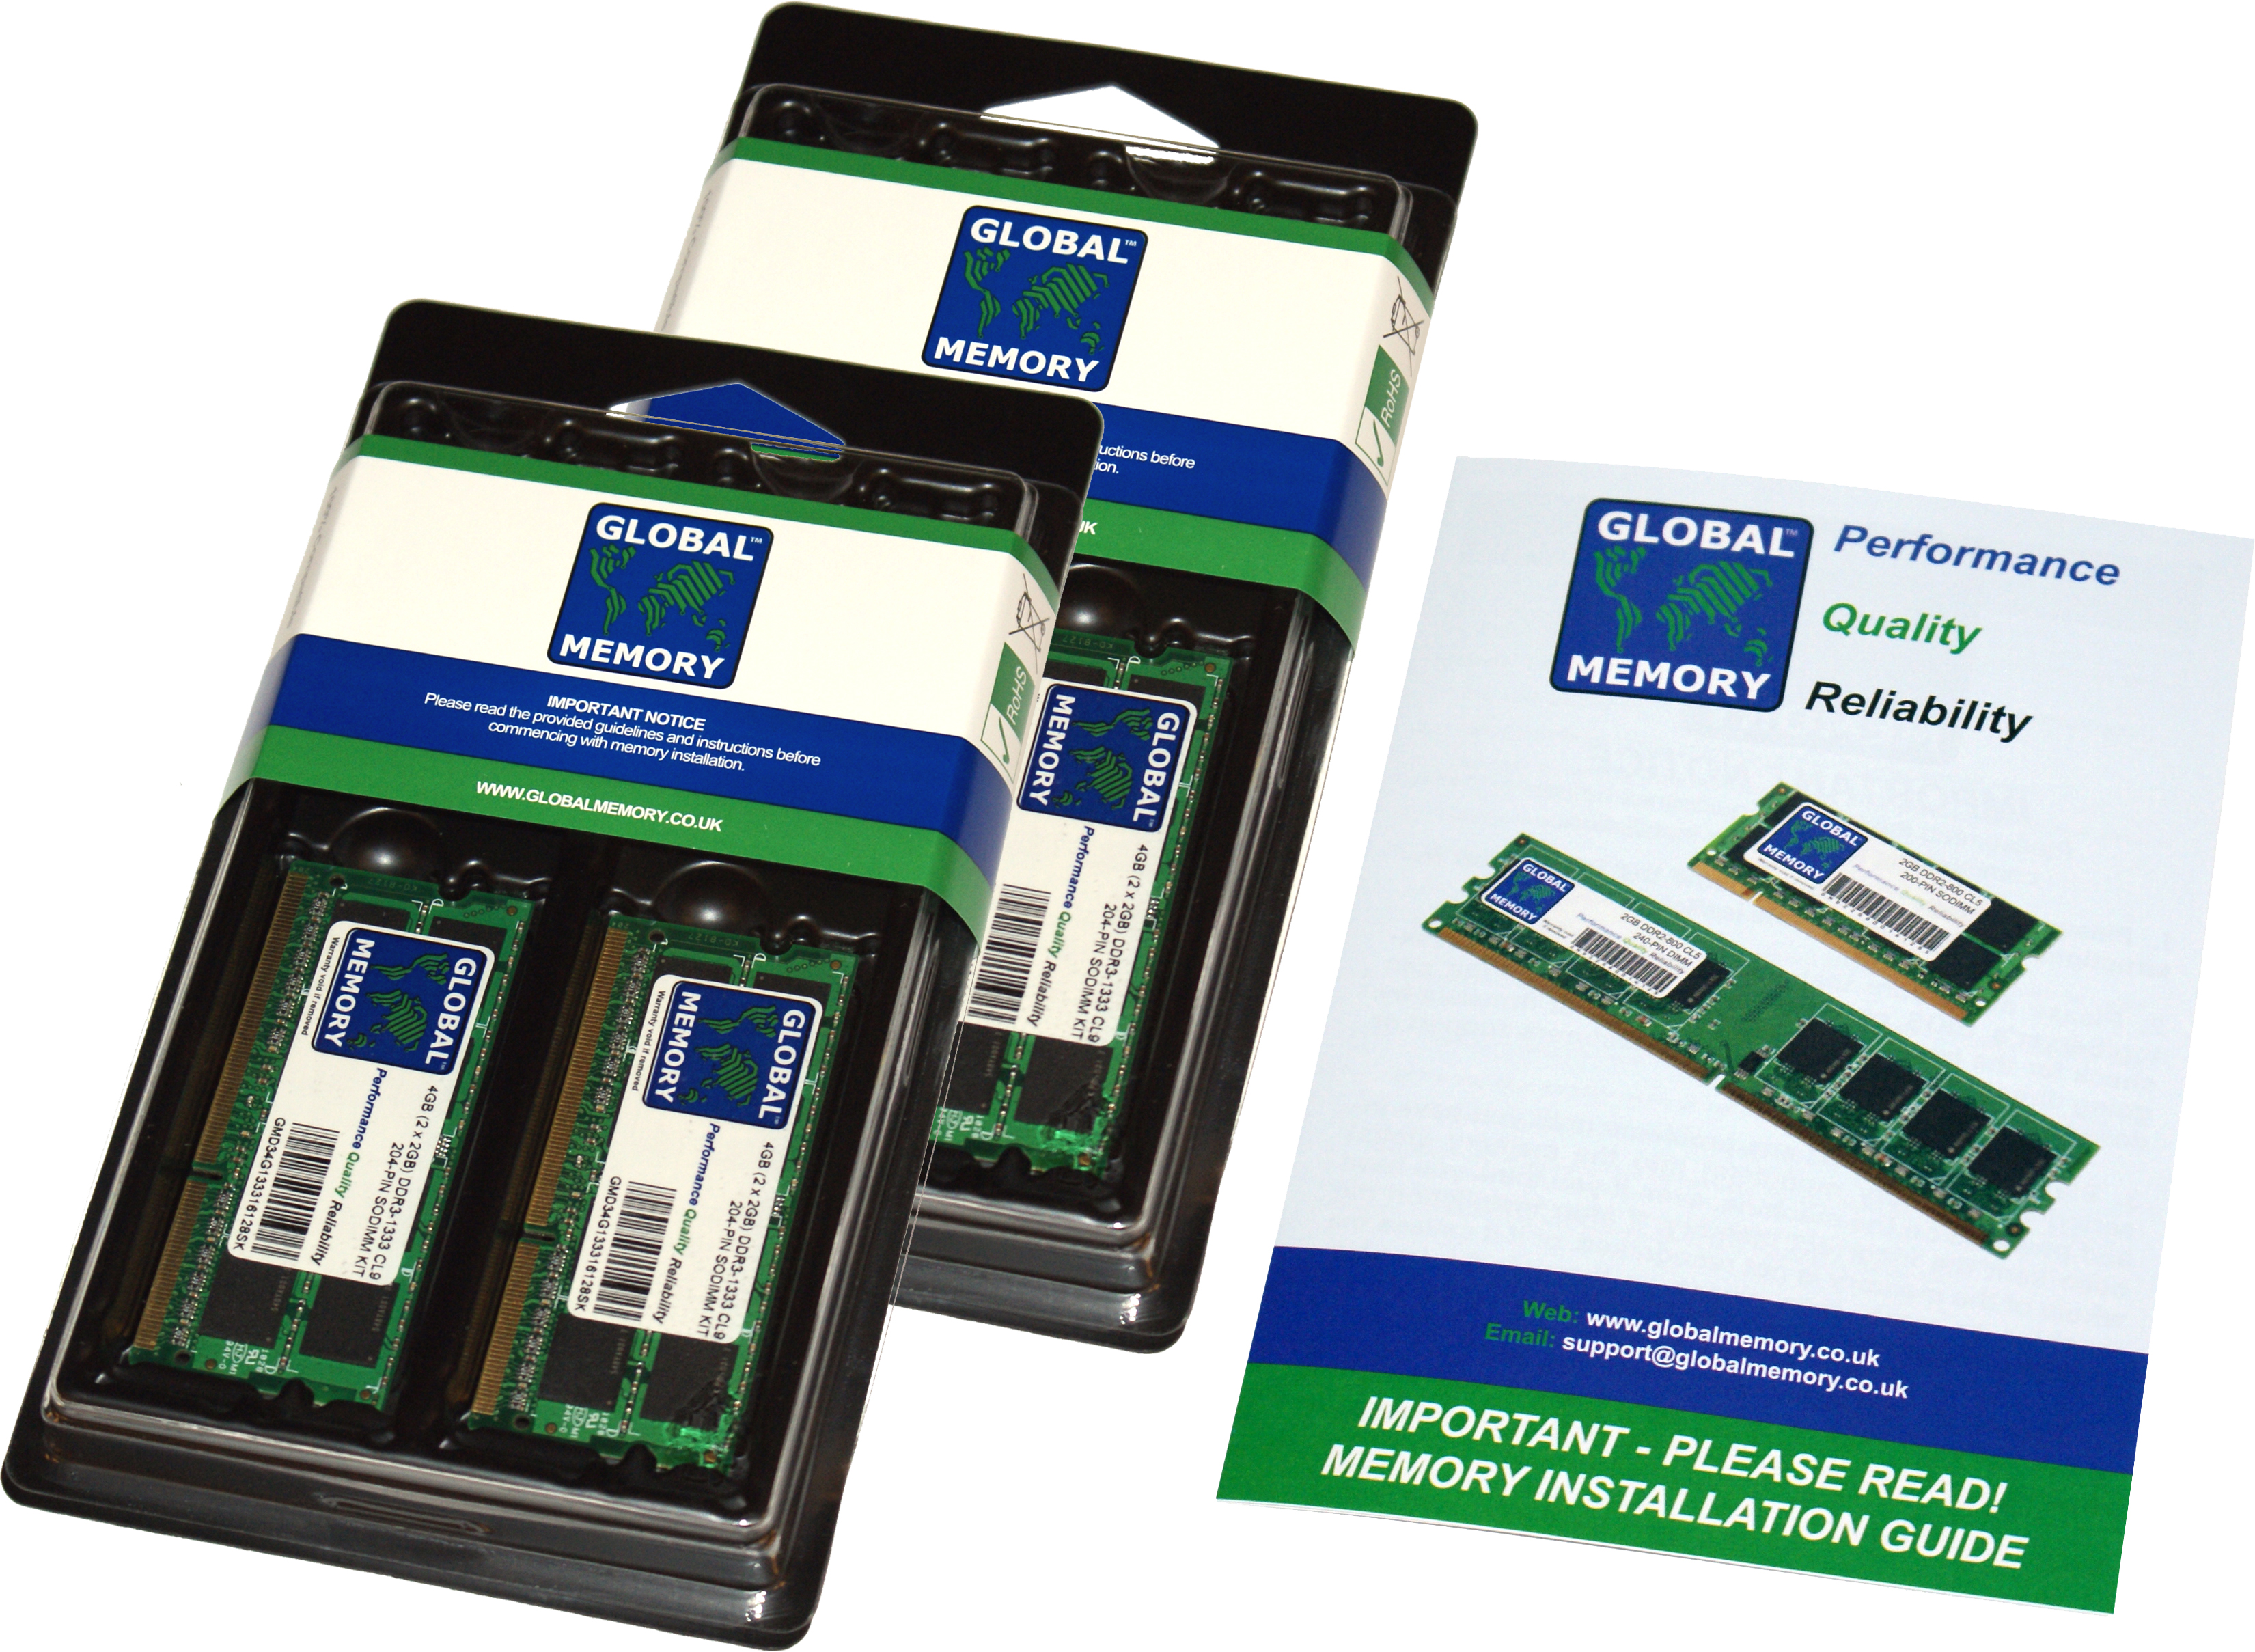 128GB (4 x 32GB) DDR4 2400MHz PC4-19200 260-PIN SODIMM MEMORY RAM KIT FOR LENOVO LAPTOPS/NOTEBOOKS